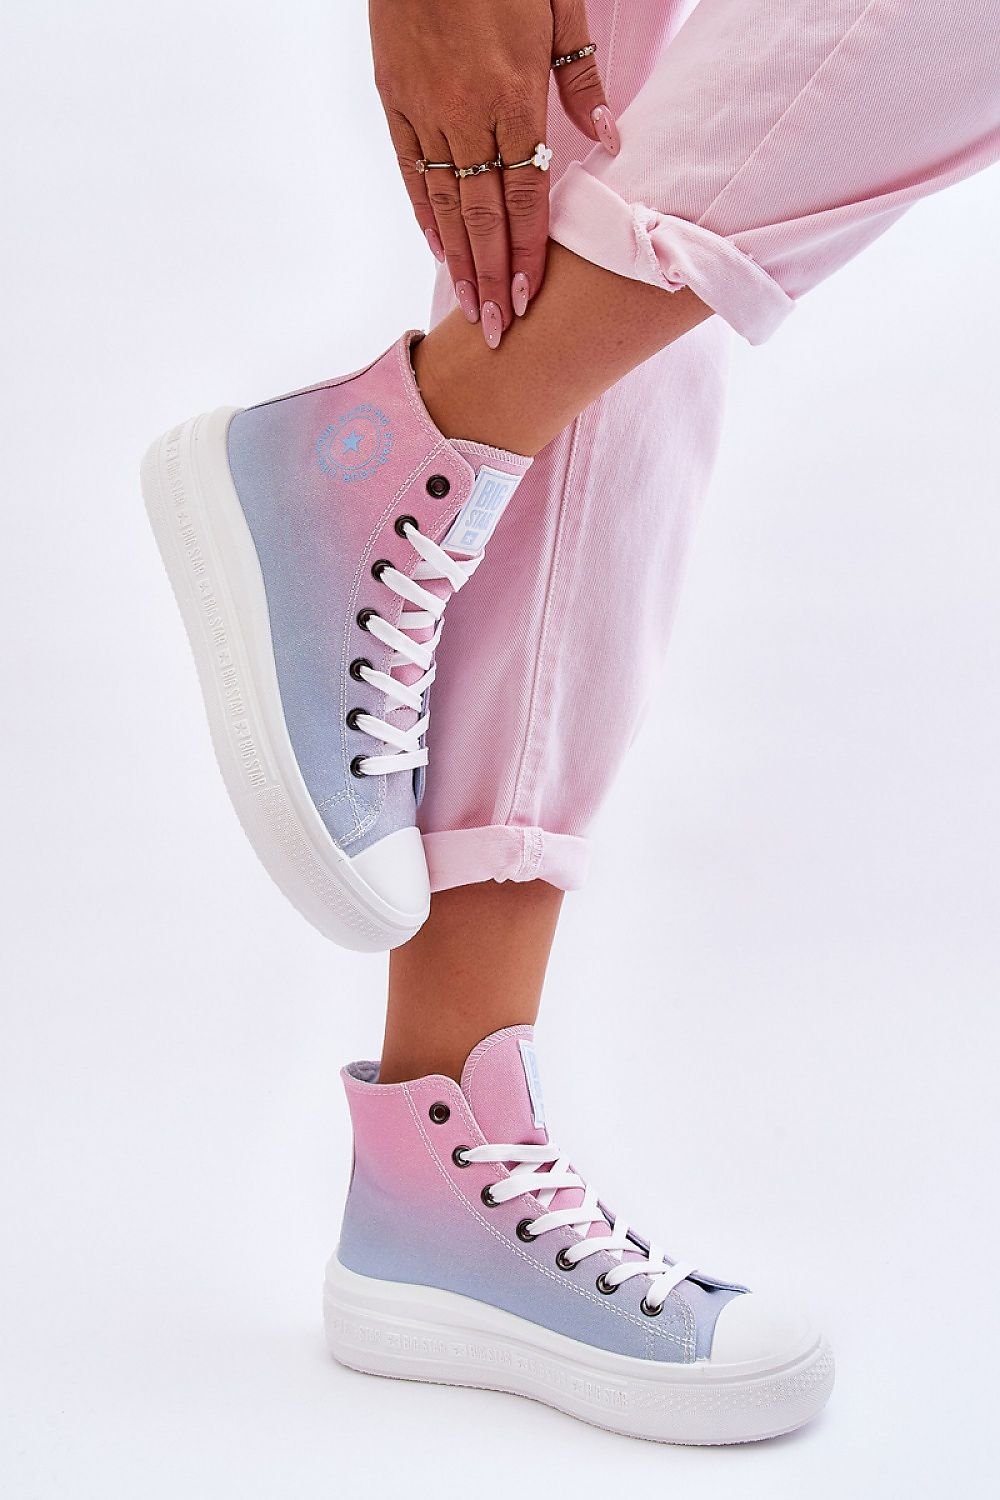 High-Top Big Star Pink Gradient Sneakers - US 5.5 - Sport Finesse